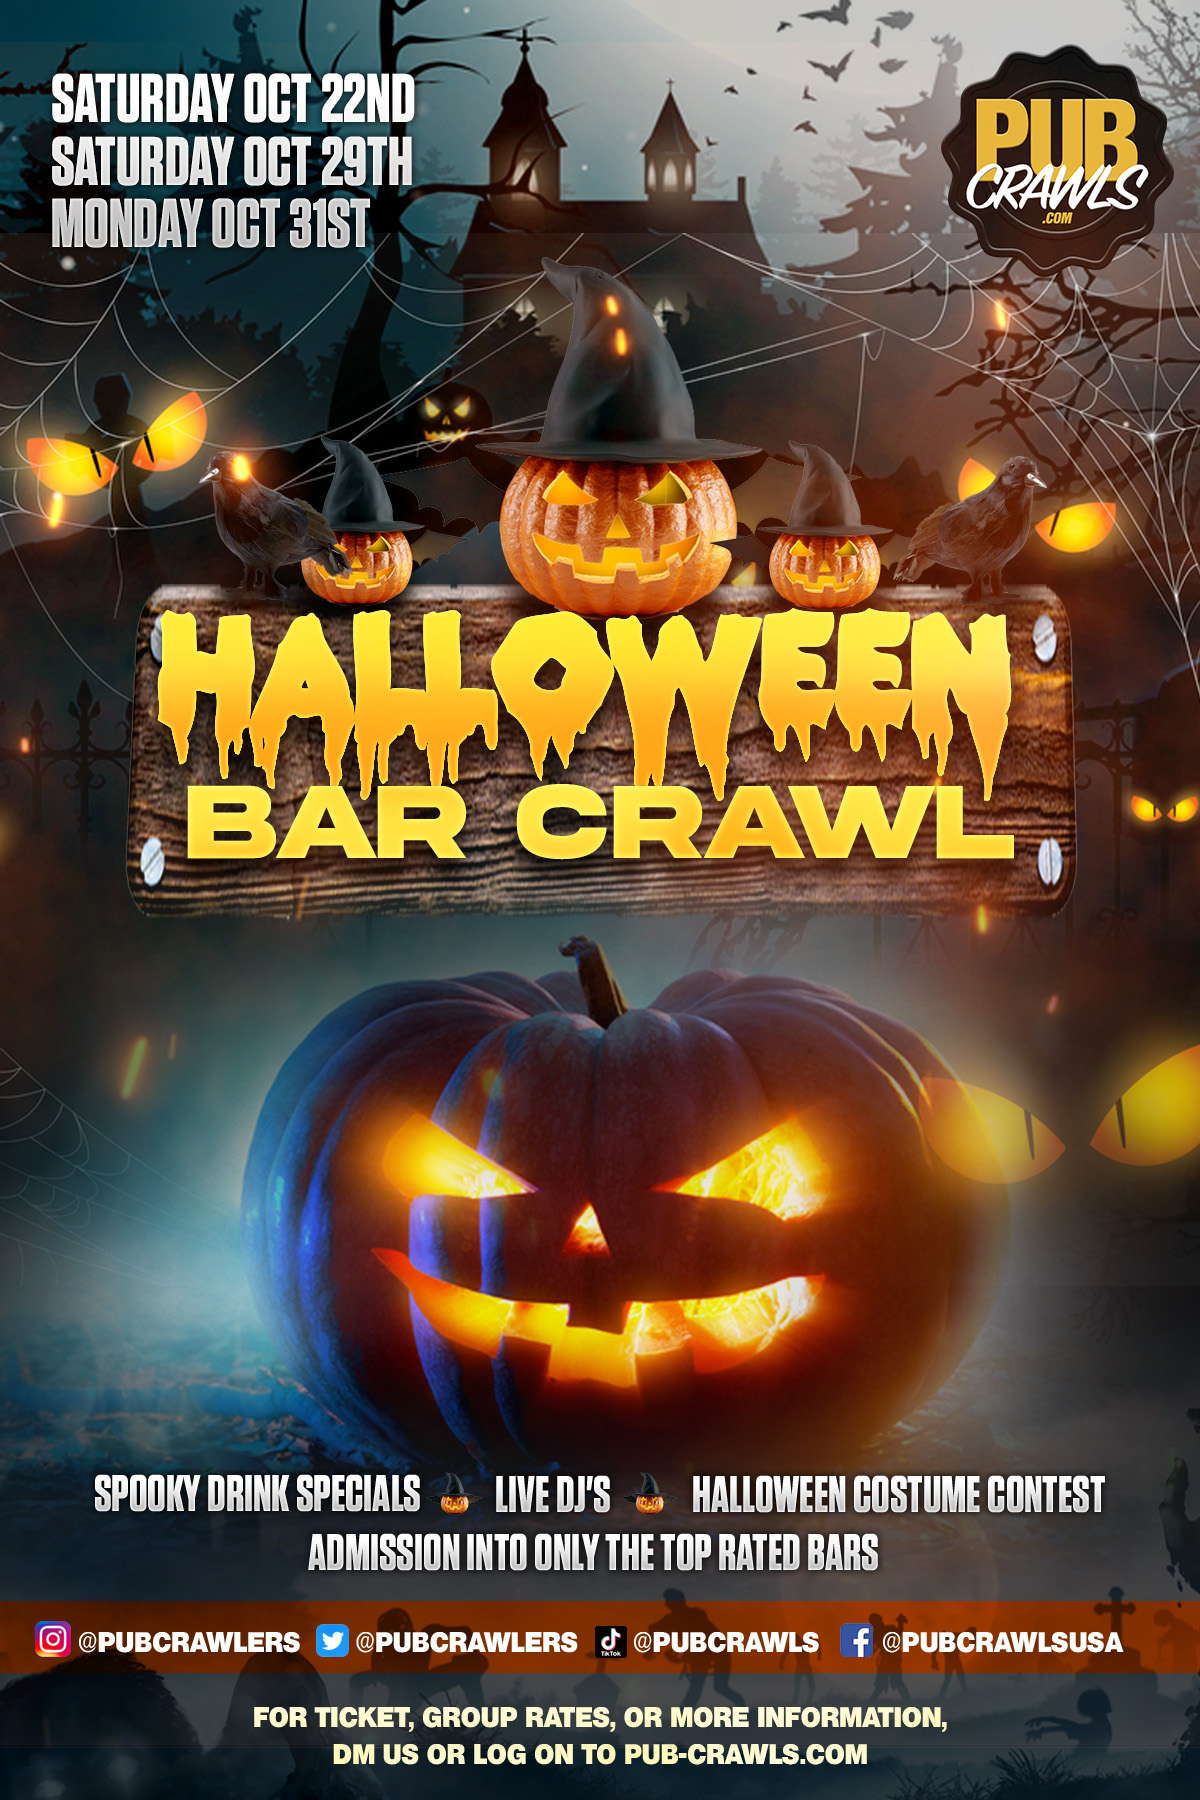 Morristown Official Halloween Pub Crawl